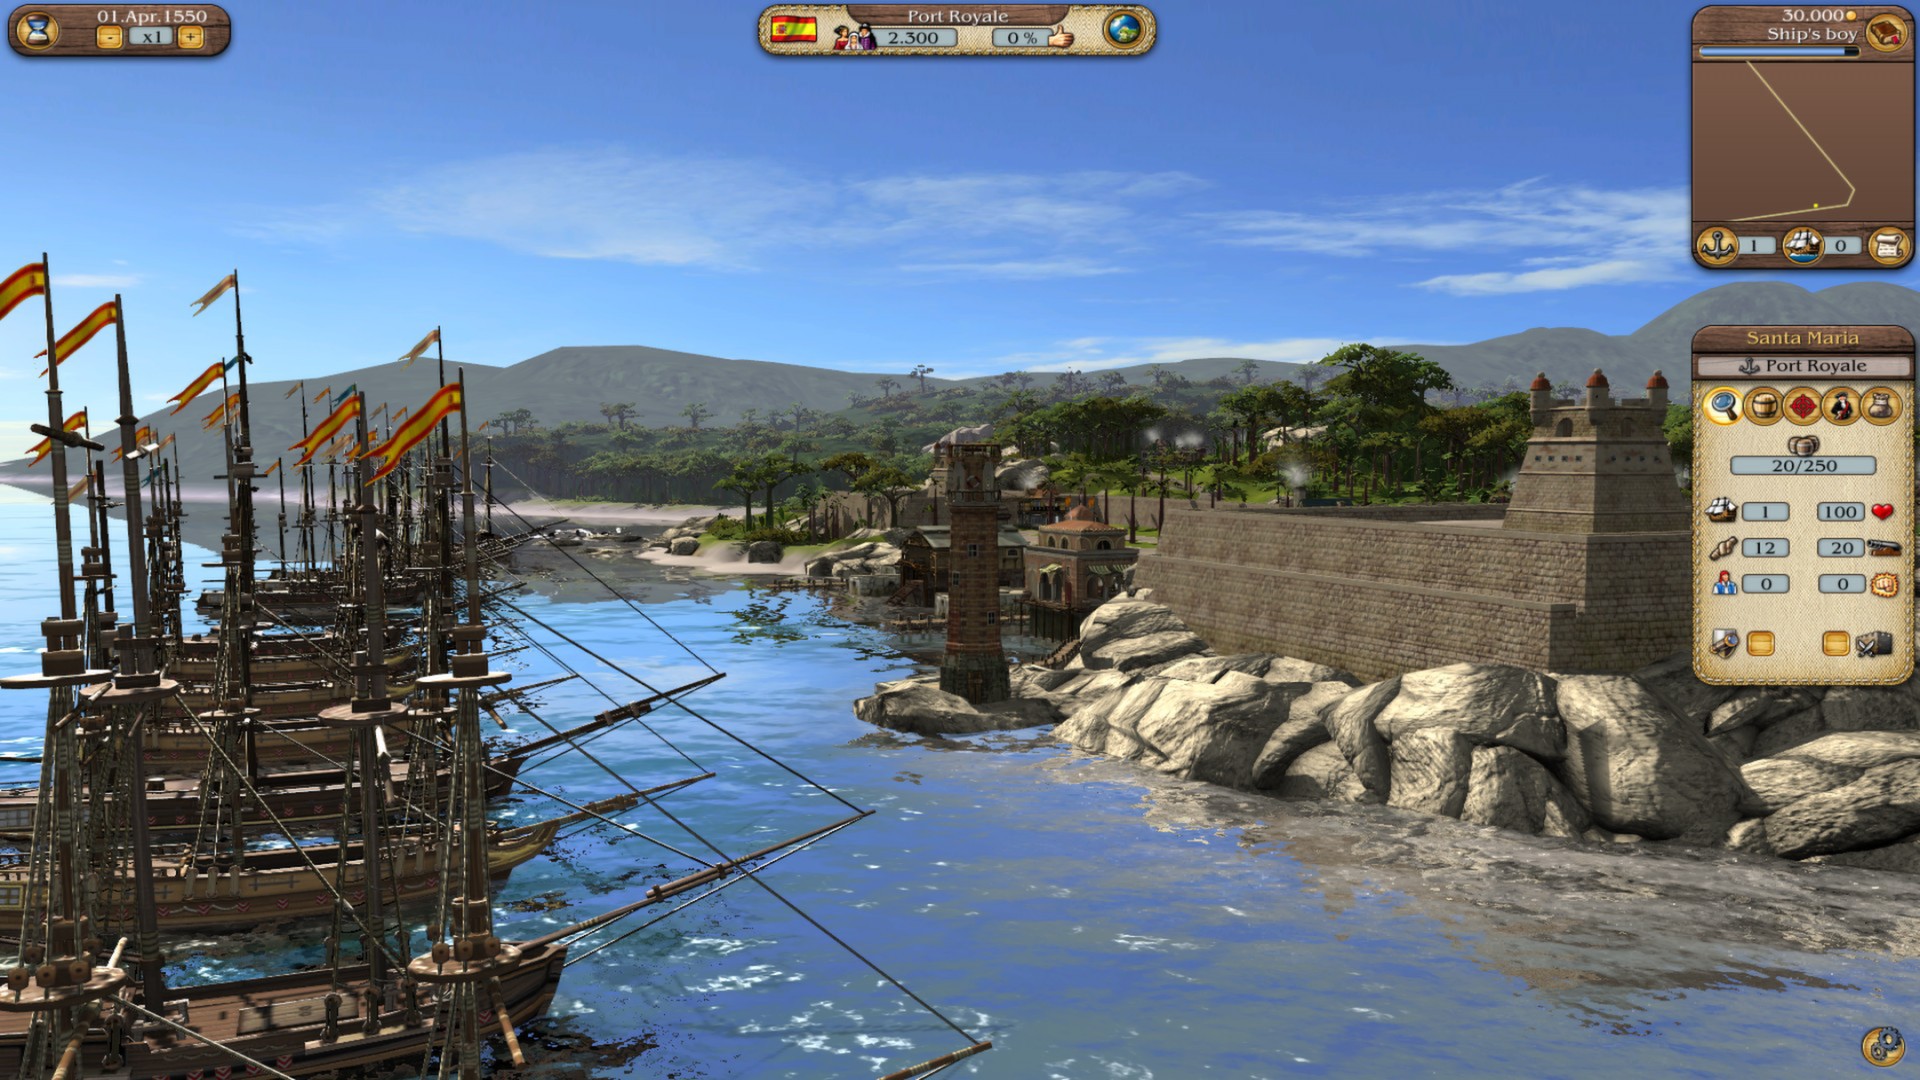 Port royale 3 mac download free